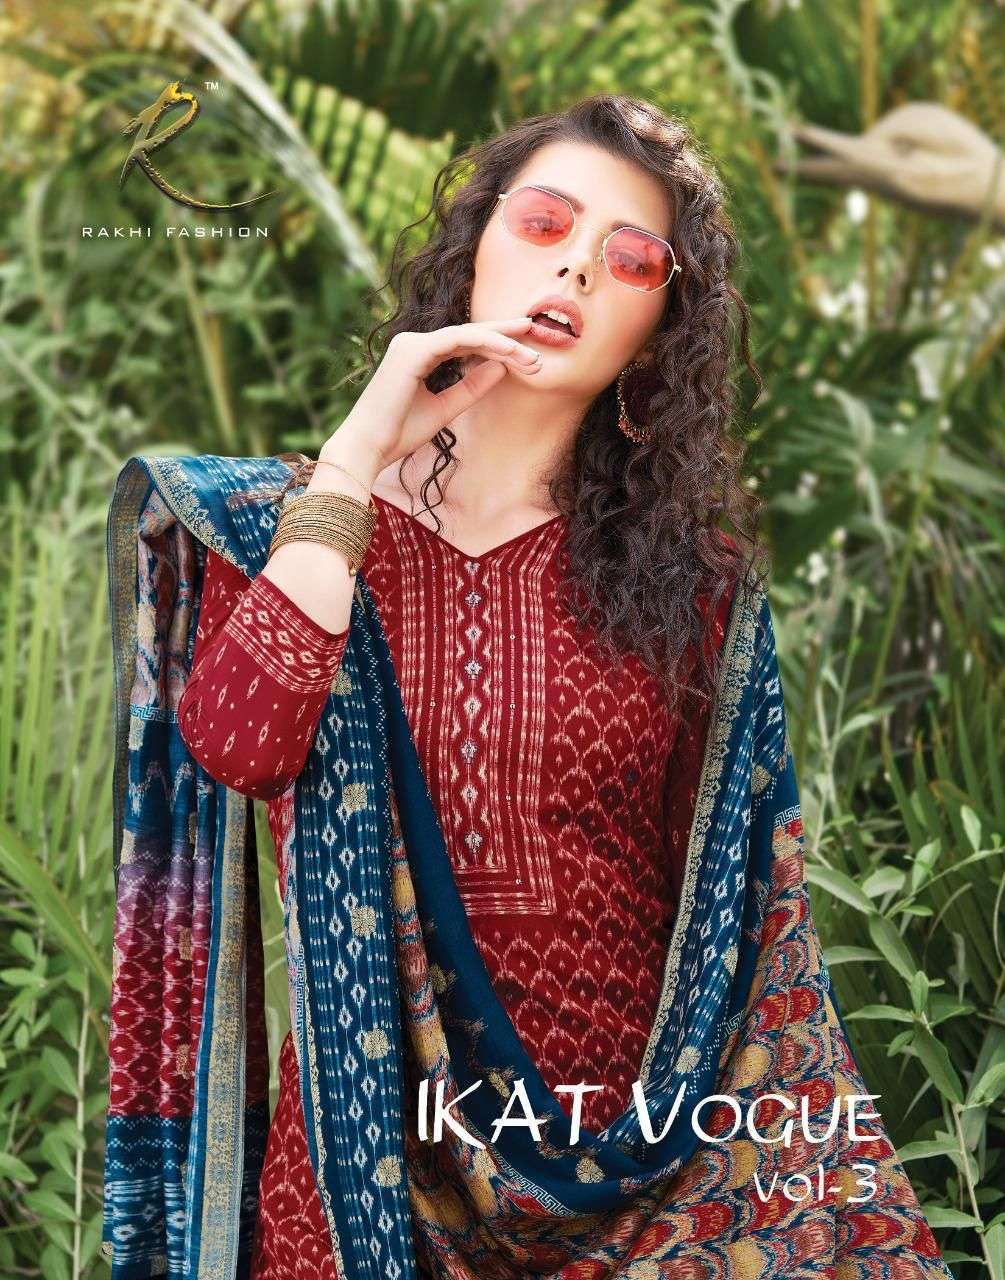 Rakhi Fashion Ikat Vogue Vol 3 Pure Viscose Modal Digital Pr...